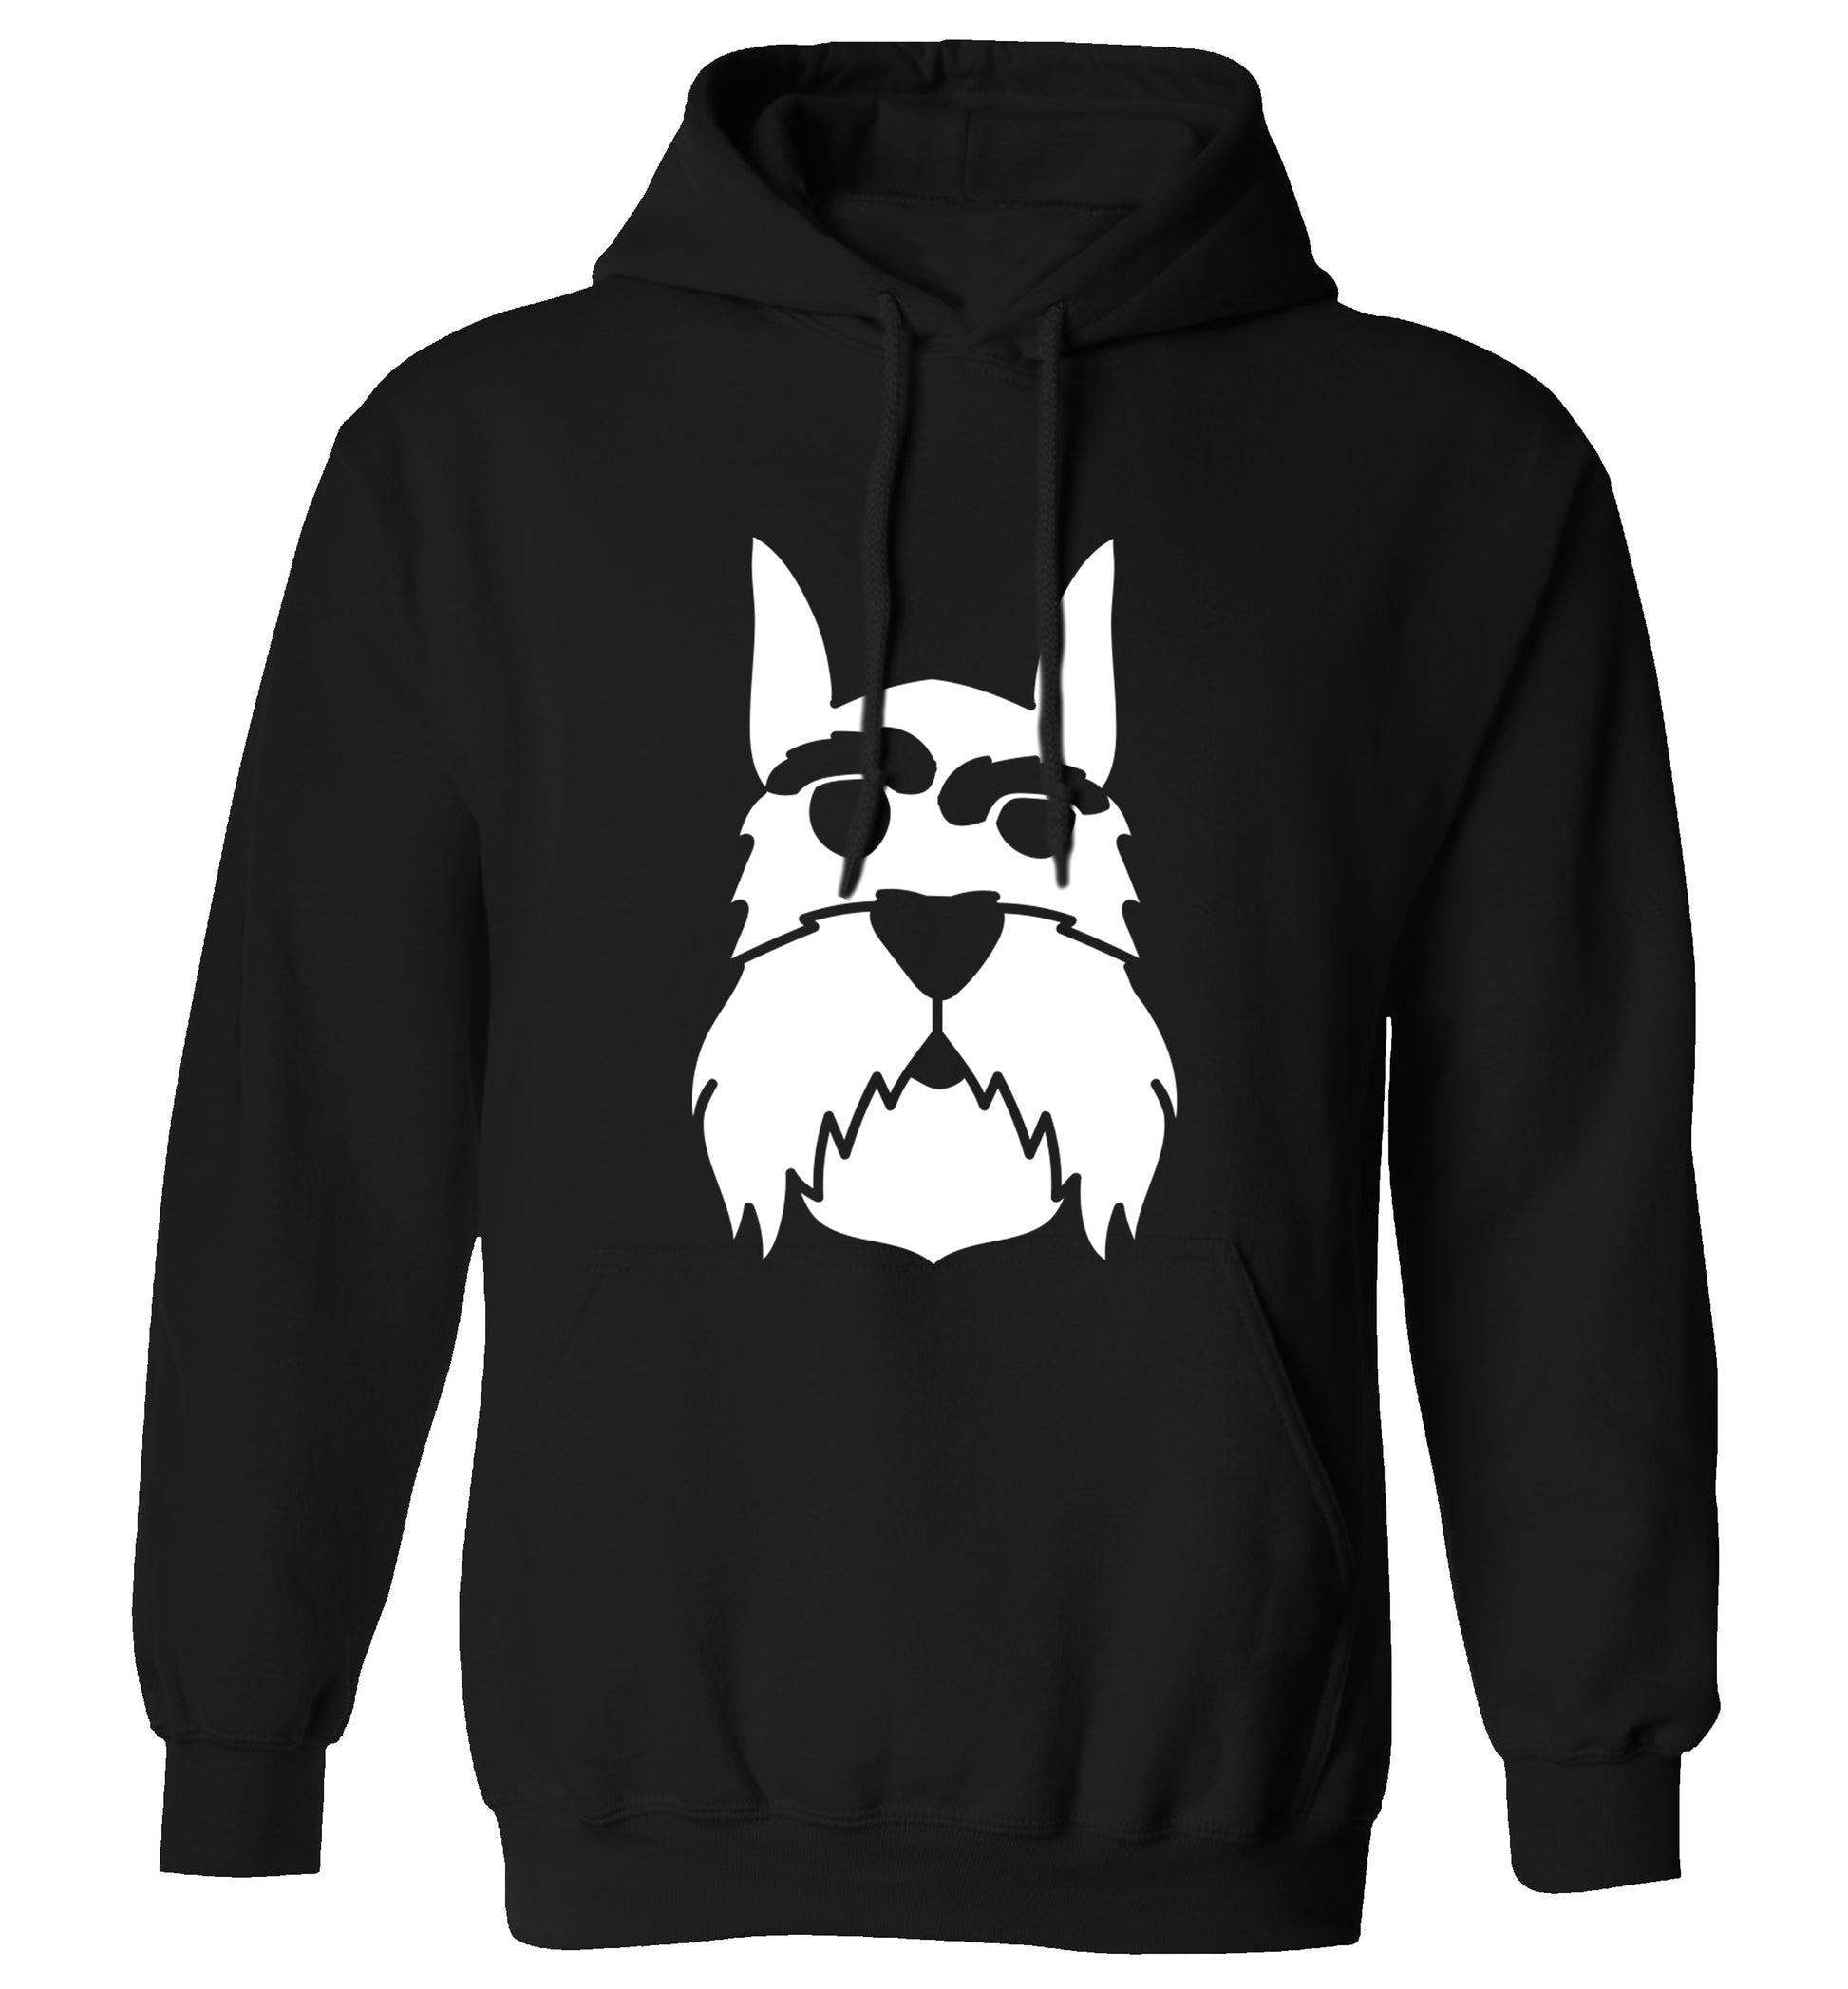 Schnauzer dog illustration adults unisex black hoodie 2XL